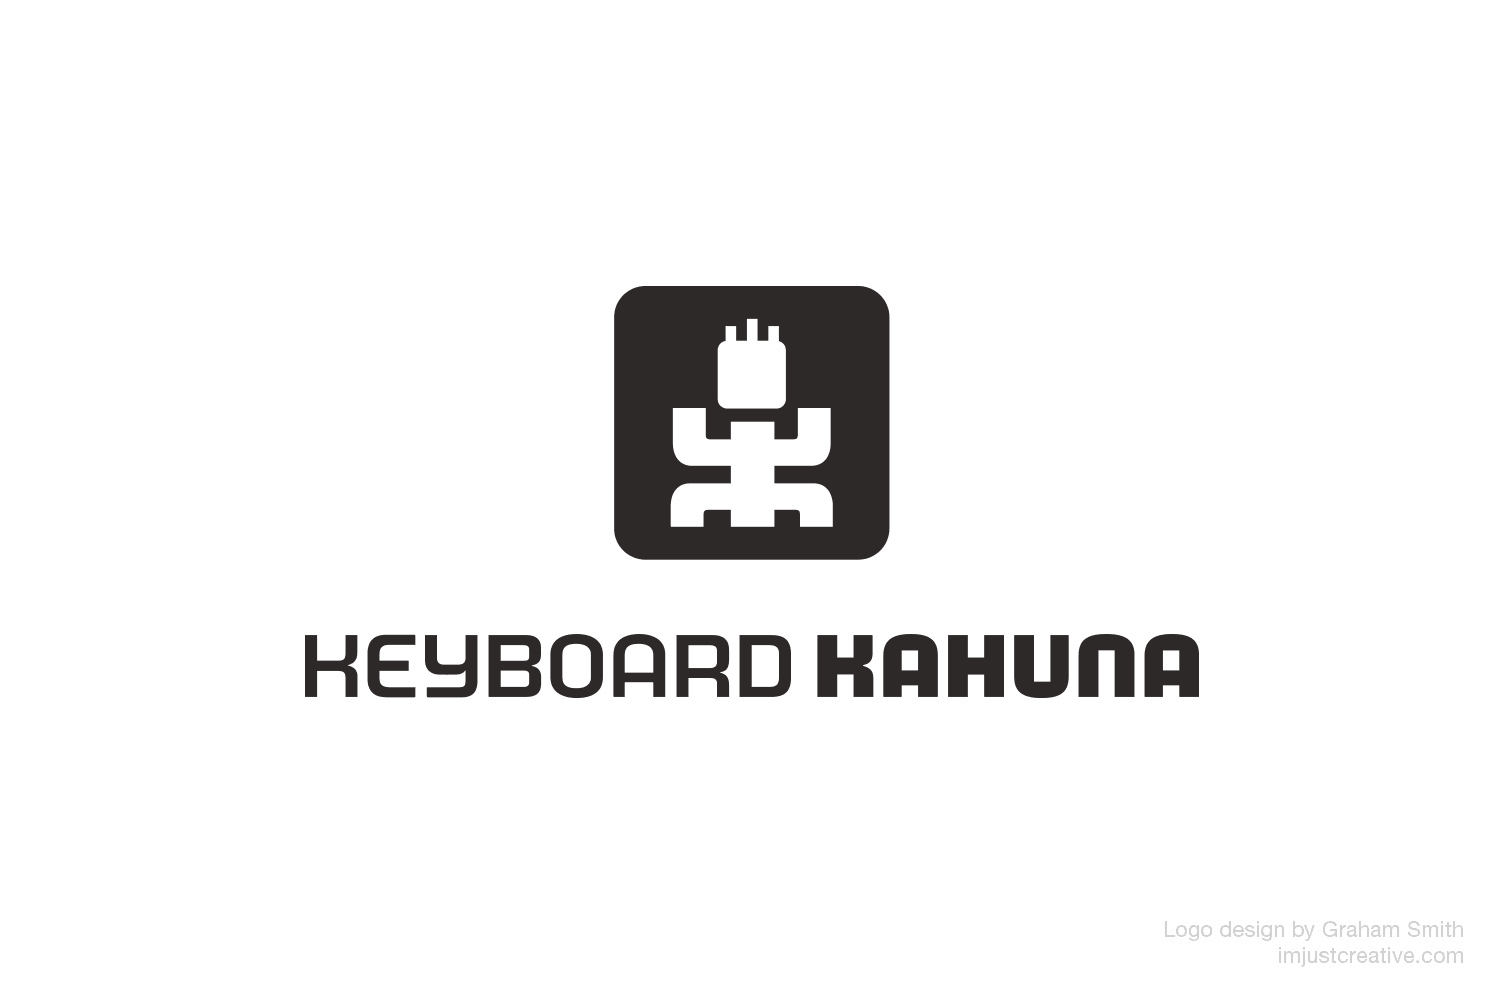 KeyboardKahuna logo design 2 by graham smith